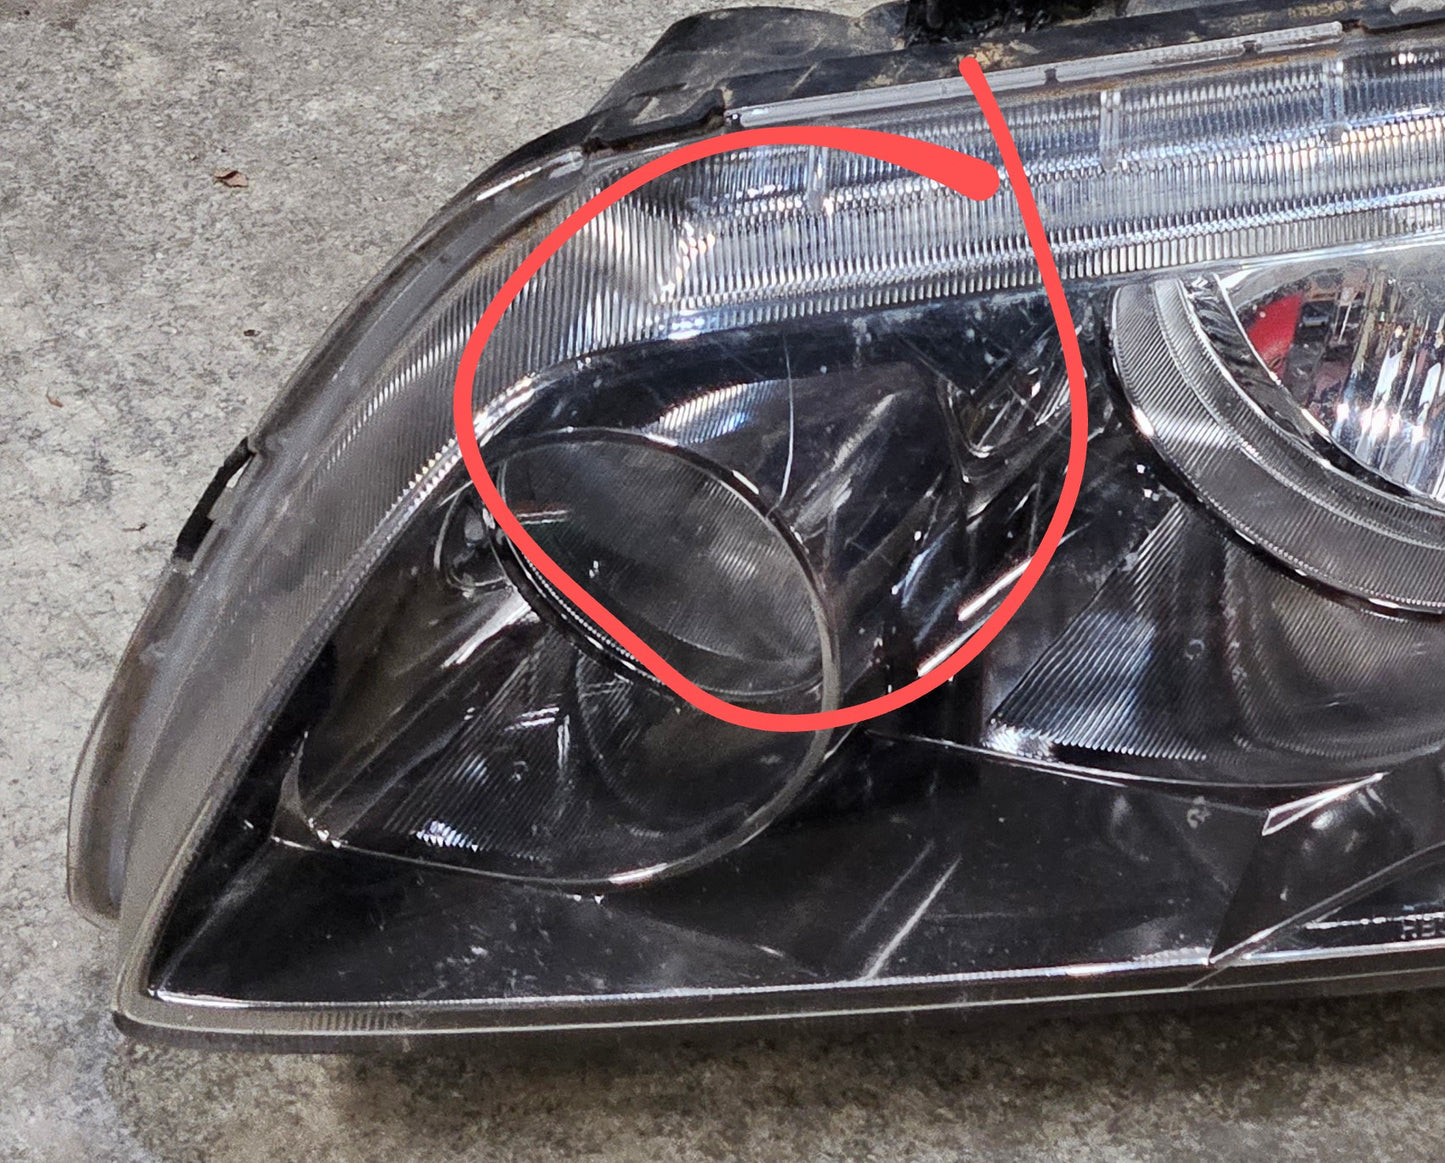 Evo 9 MR HID Driver Headlight *repaired*